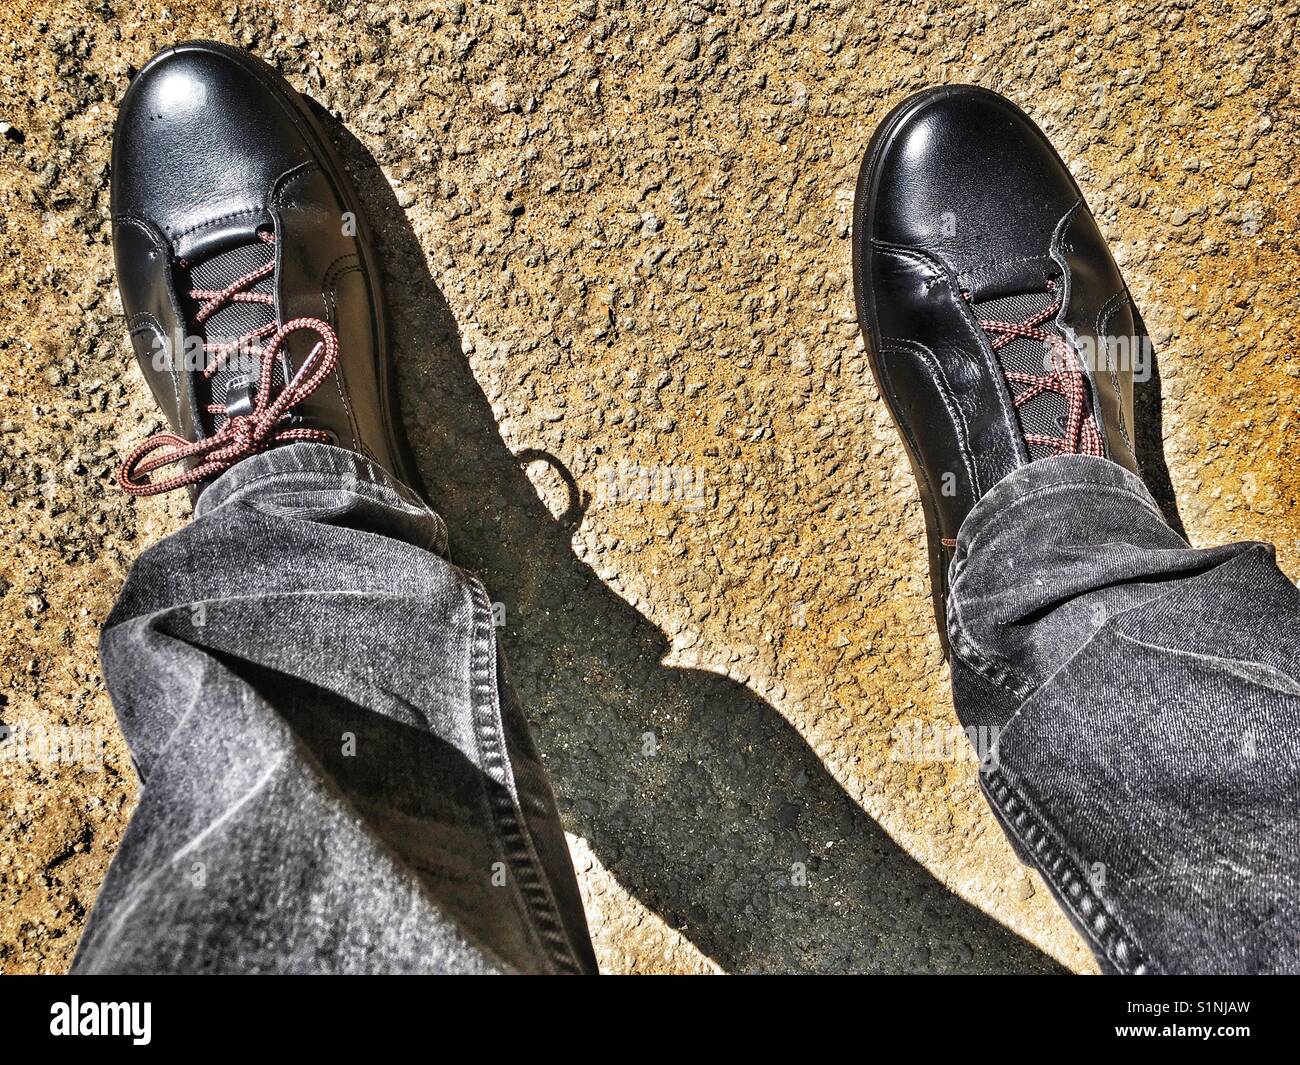 Ecco men's shoes Stock Photo